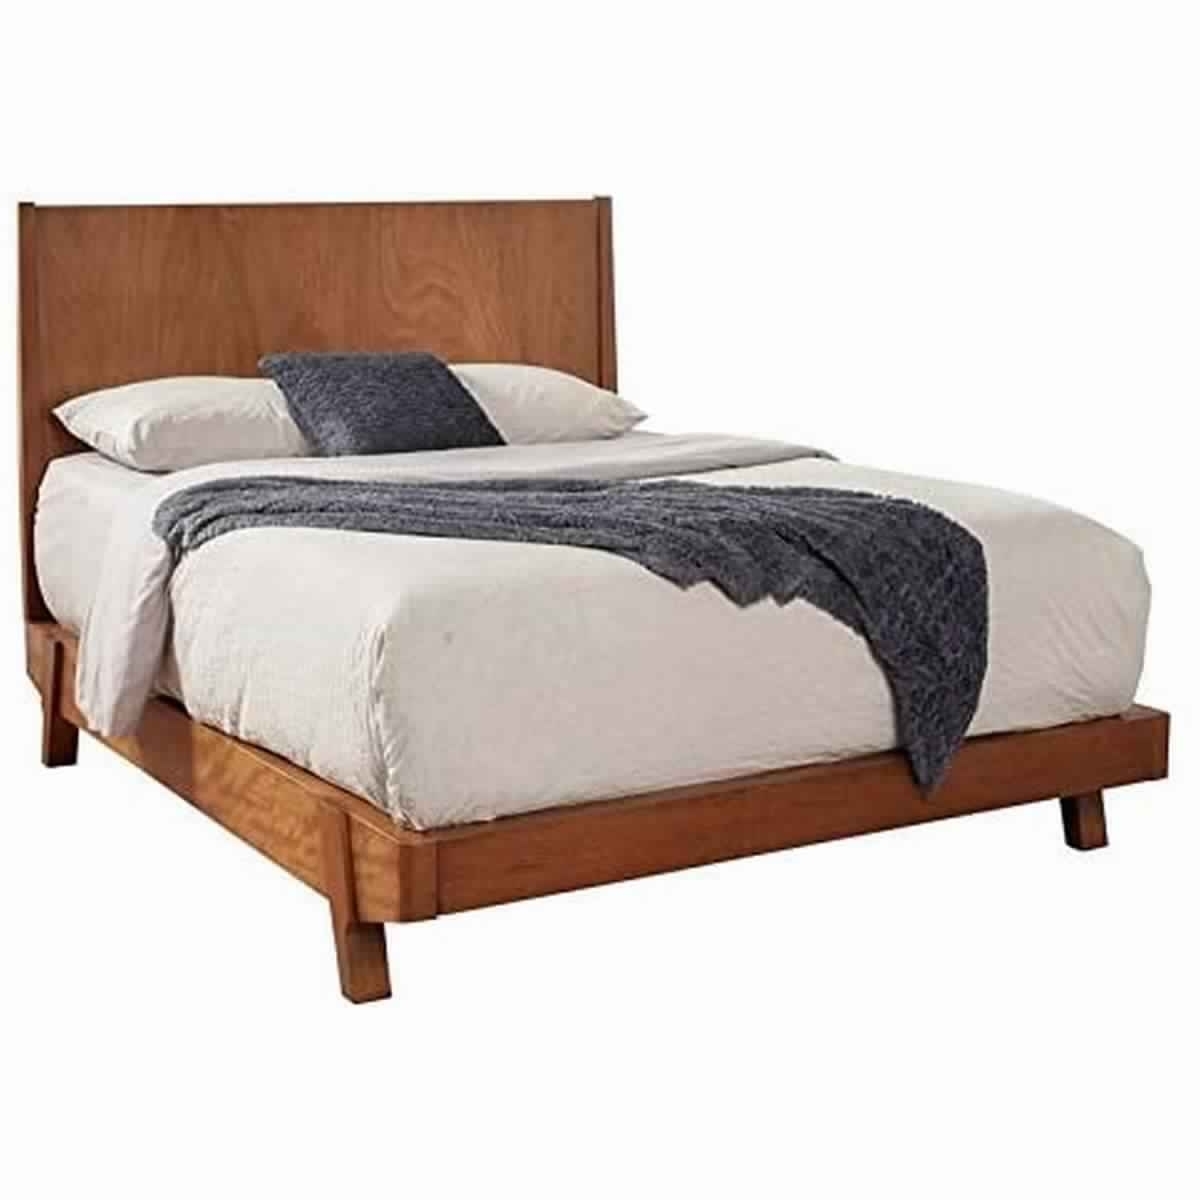 Full Platform Bed With Angled Block Legs And Grain Details, Brown- Saltoro Sherpi